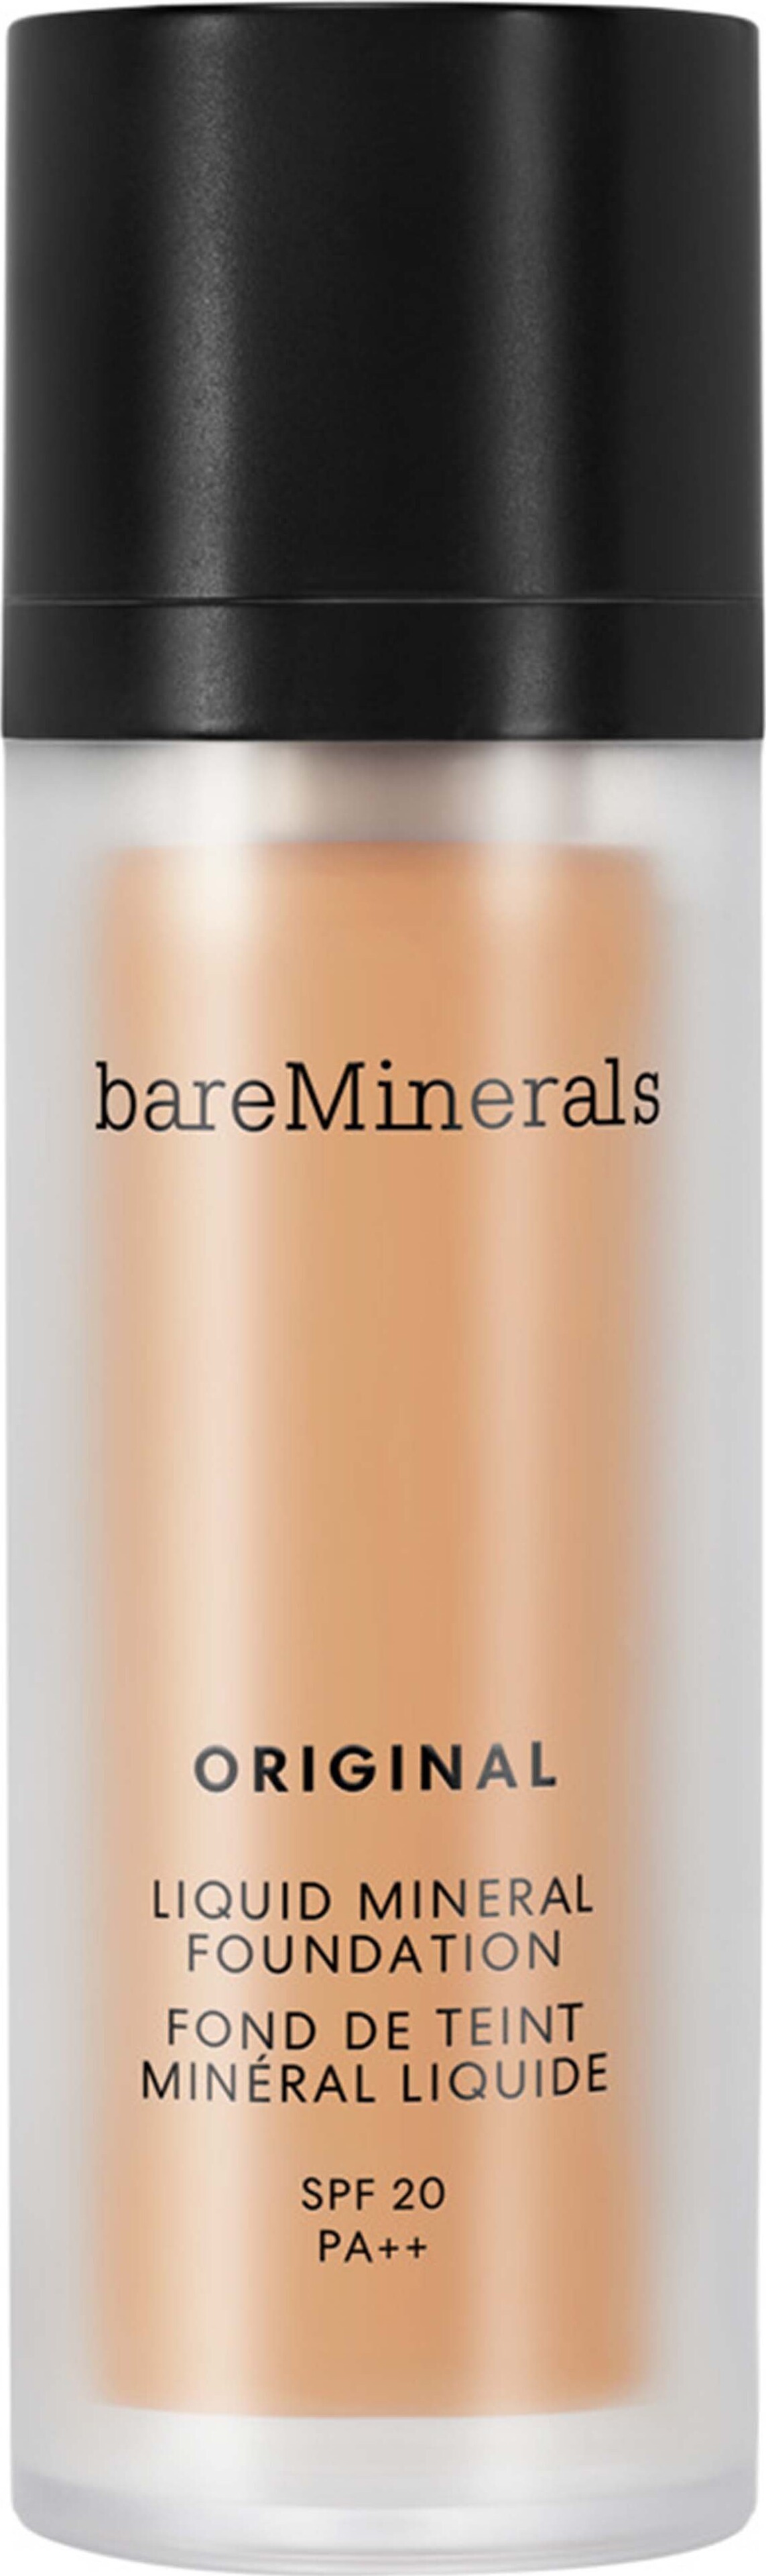 Bareminerals - Original Liquid Mineral Foundation - Golden Nude 16